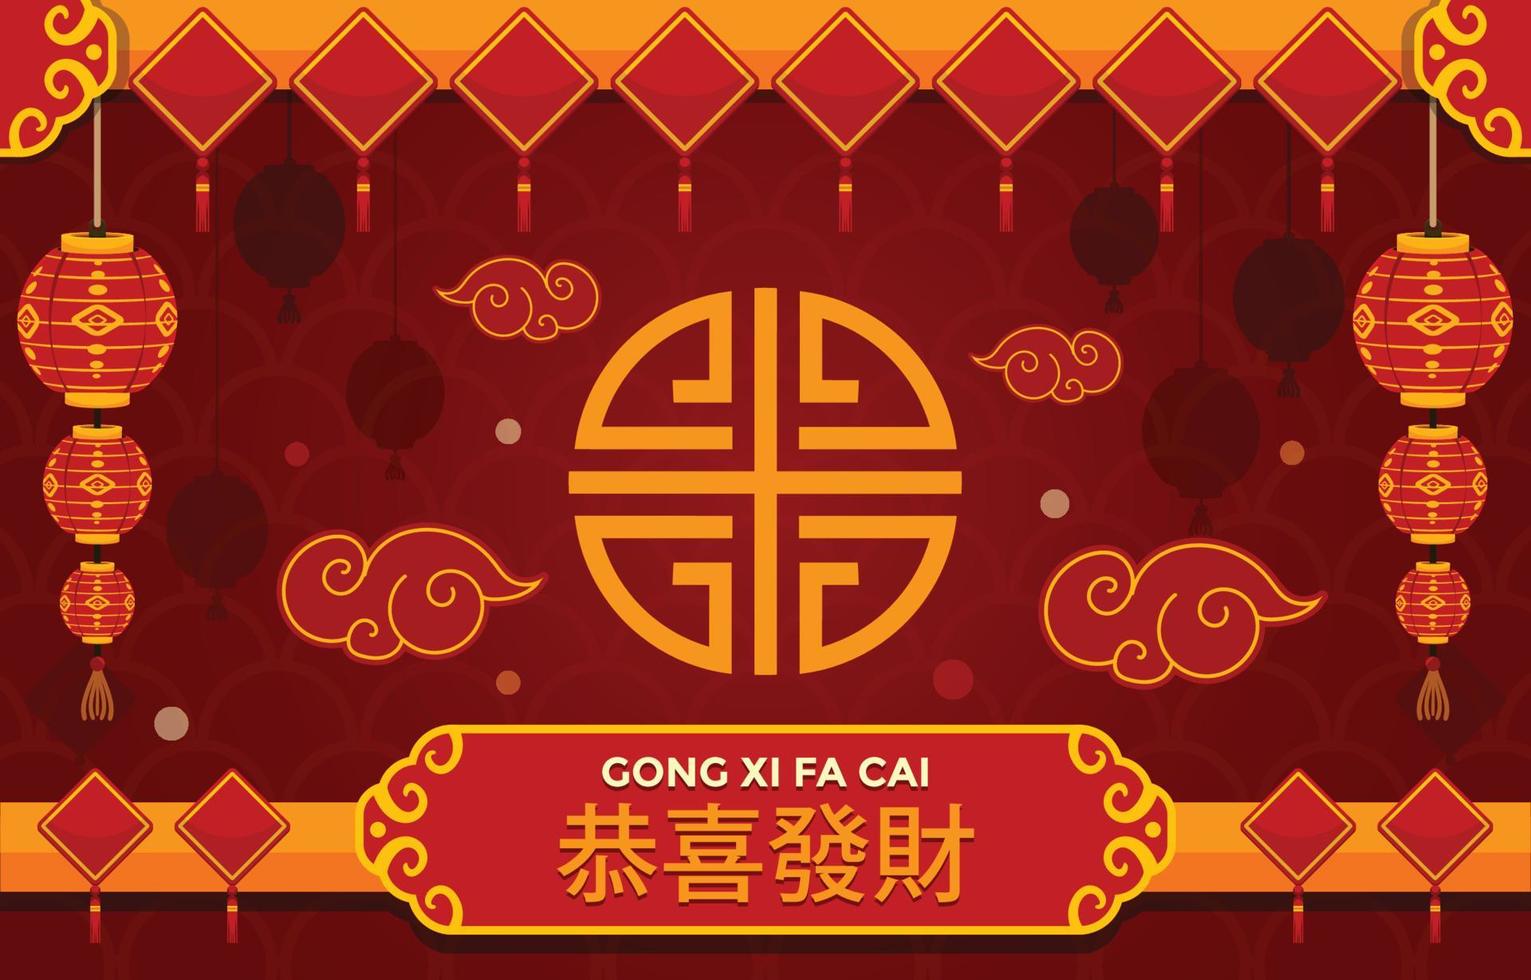 fond du nouvel an chinois gong xi fa cai vecteur